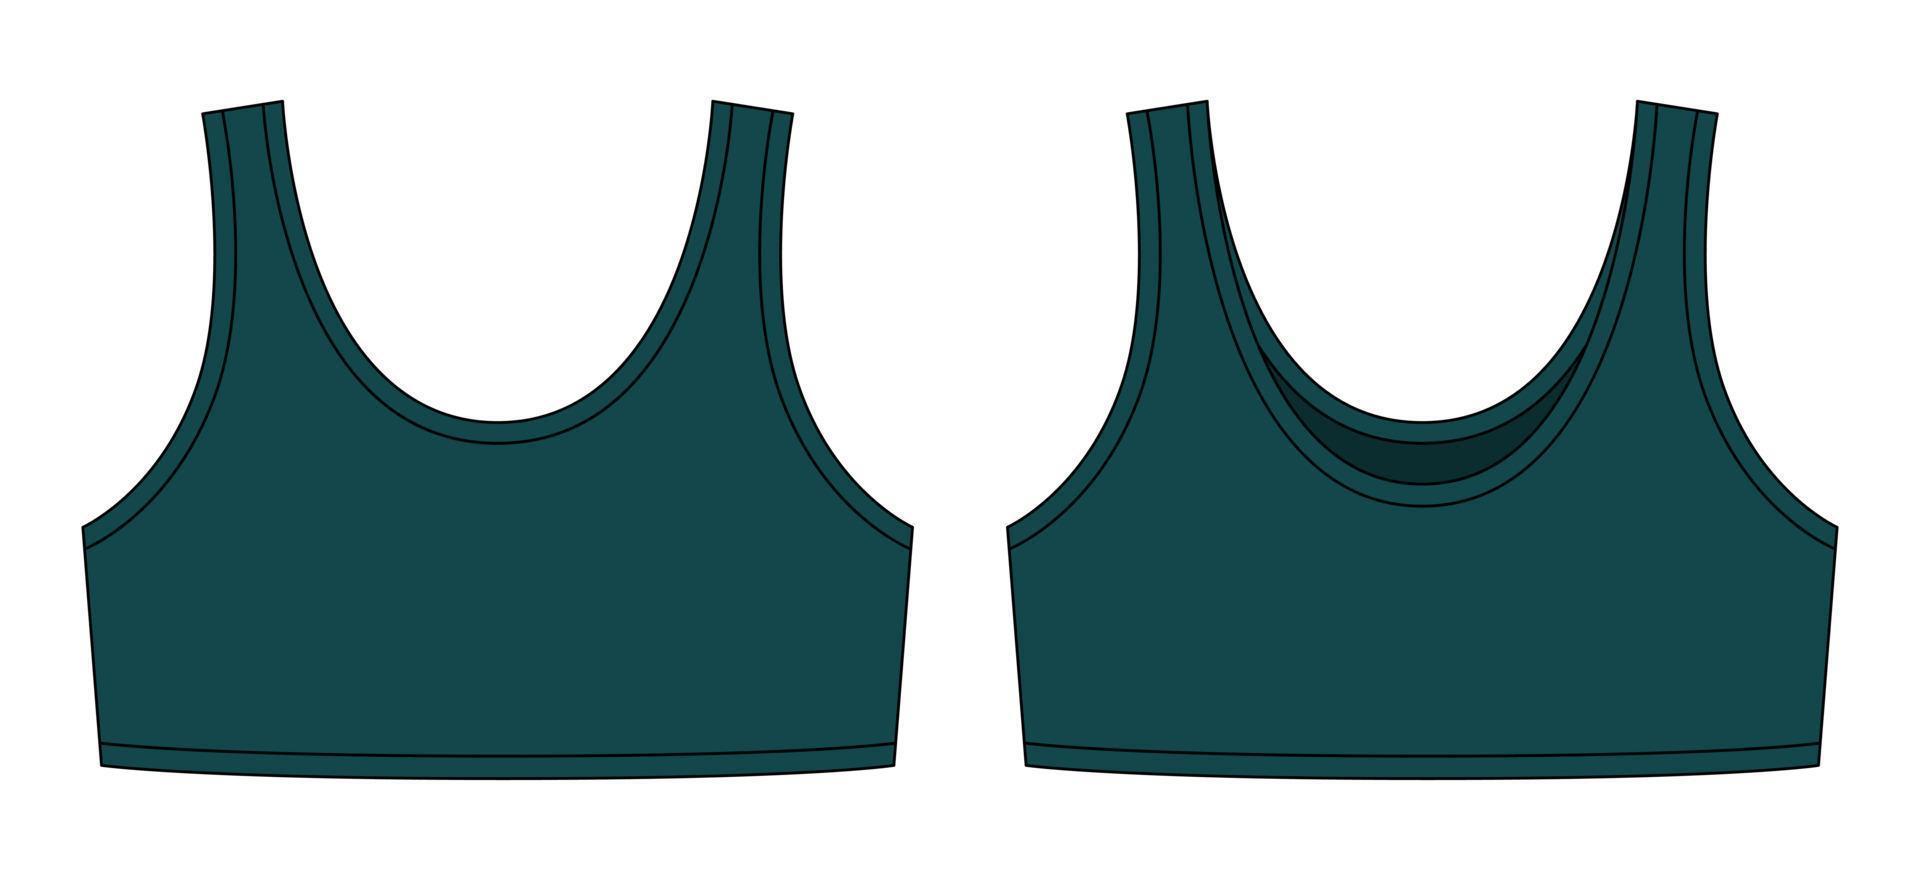 Girl bra technical sketch illustration. Dark green color. Casual underclothing. vector